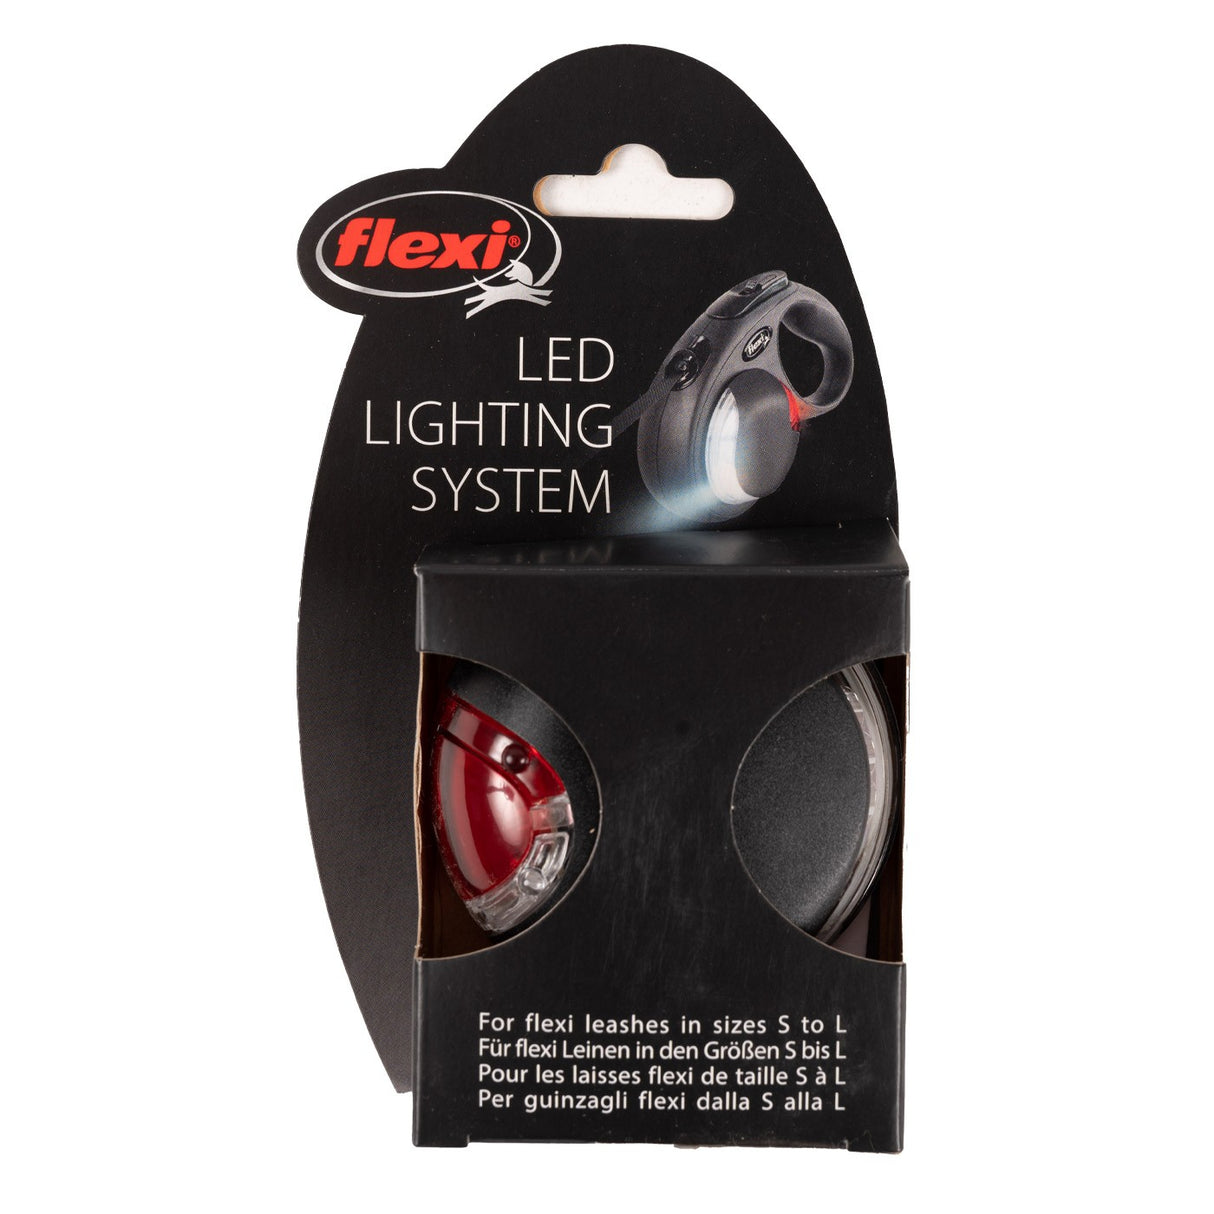 Flexi LED Leash Light System